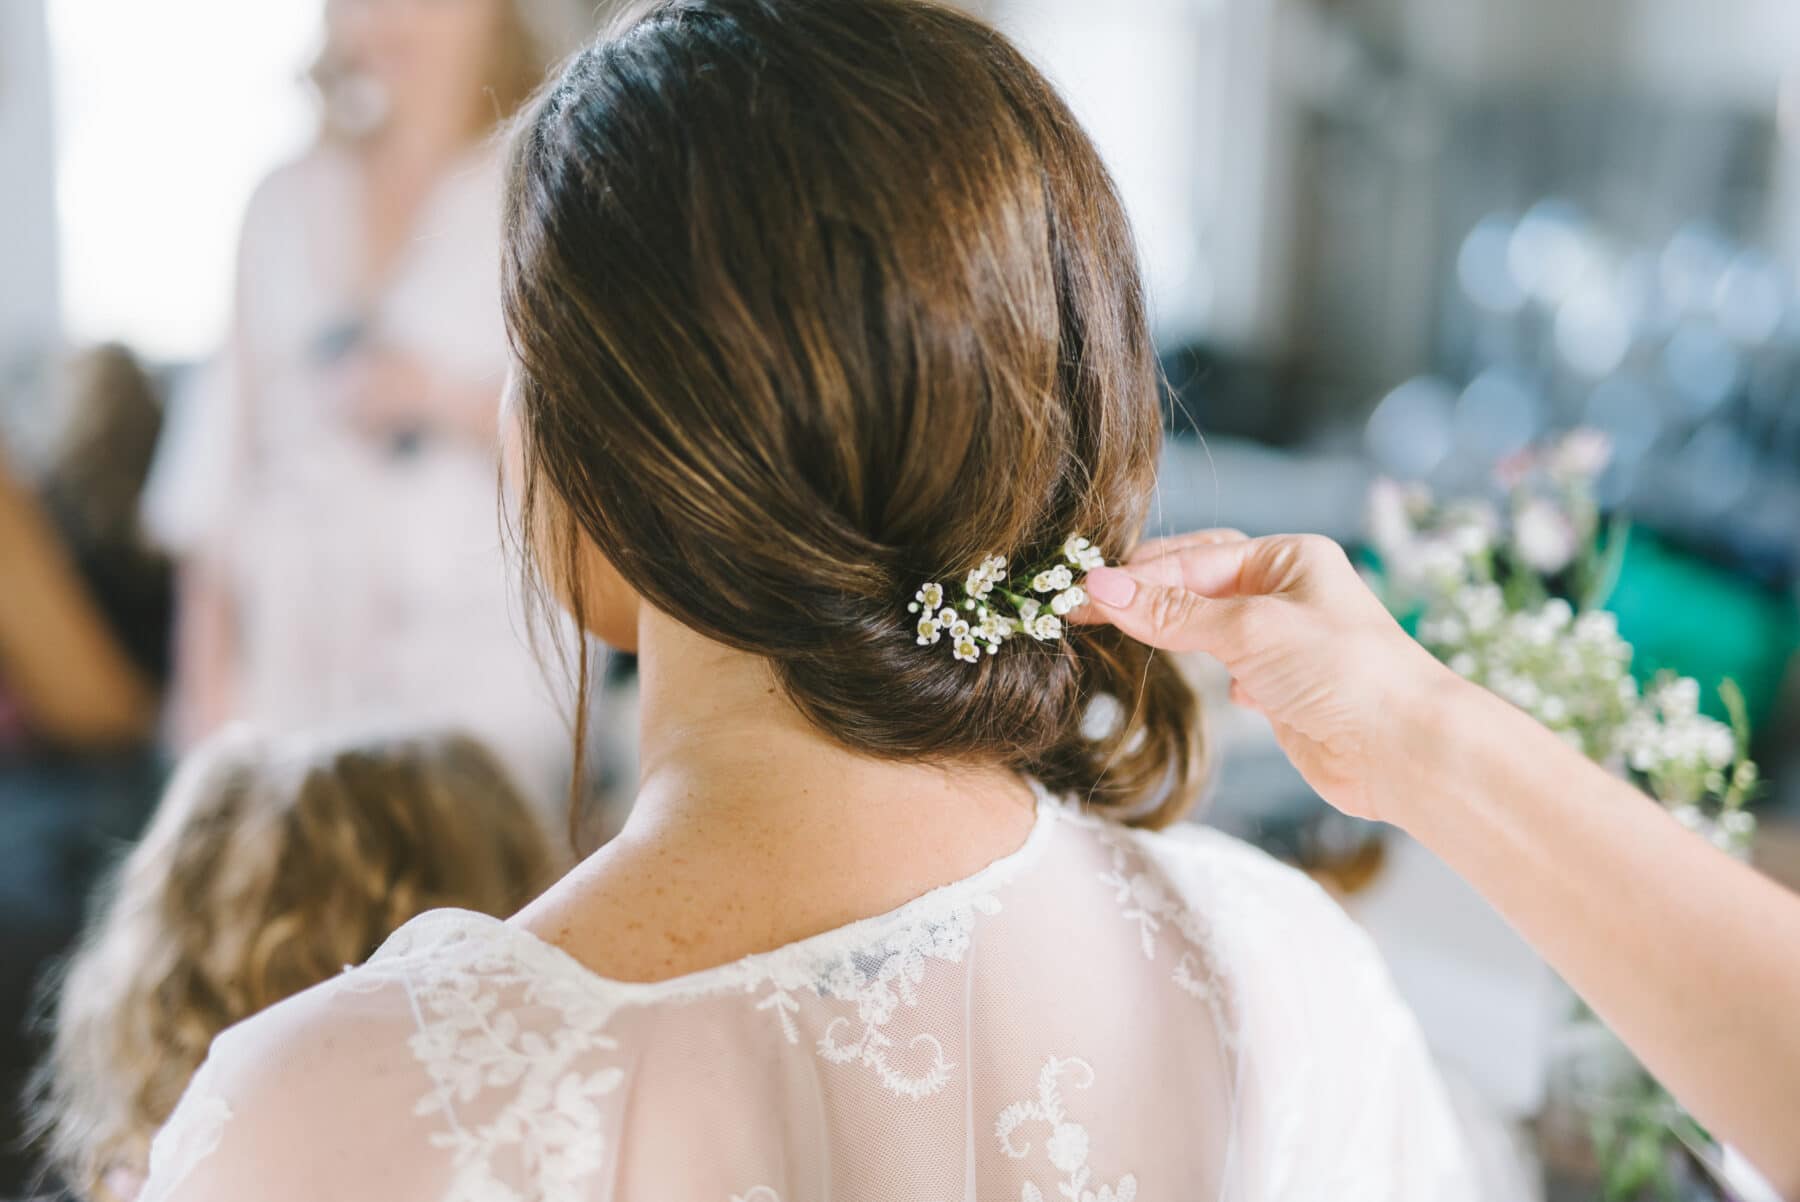 Dainty Floral Wedding Hair Accessory | Nashville Bride Guide